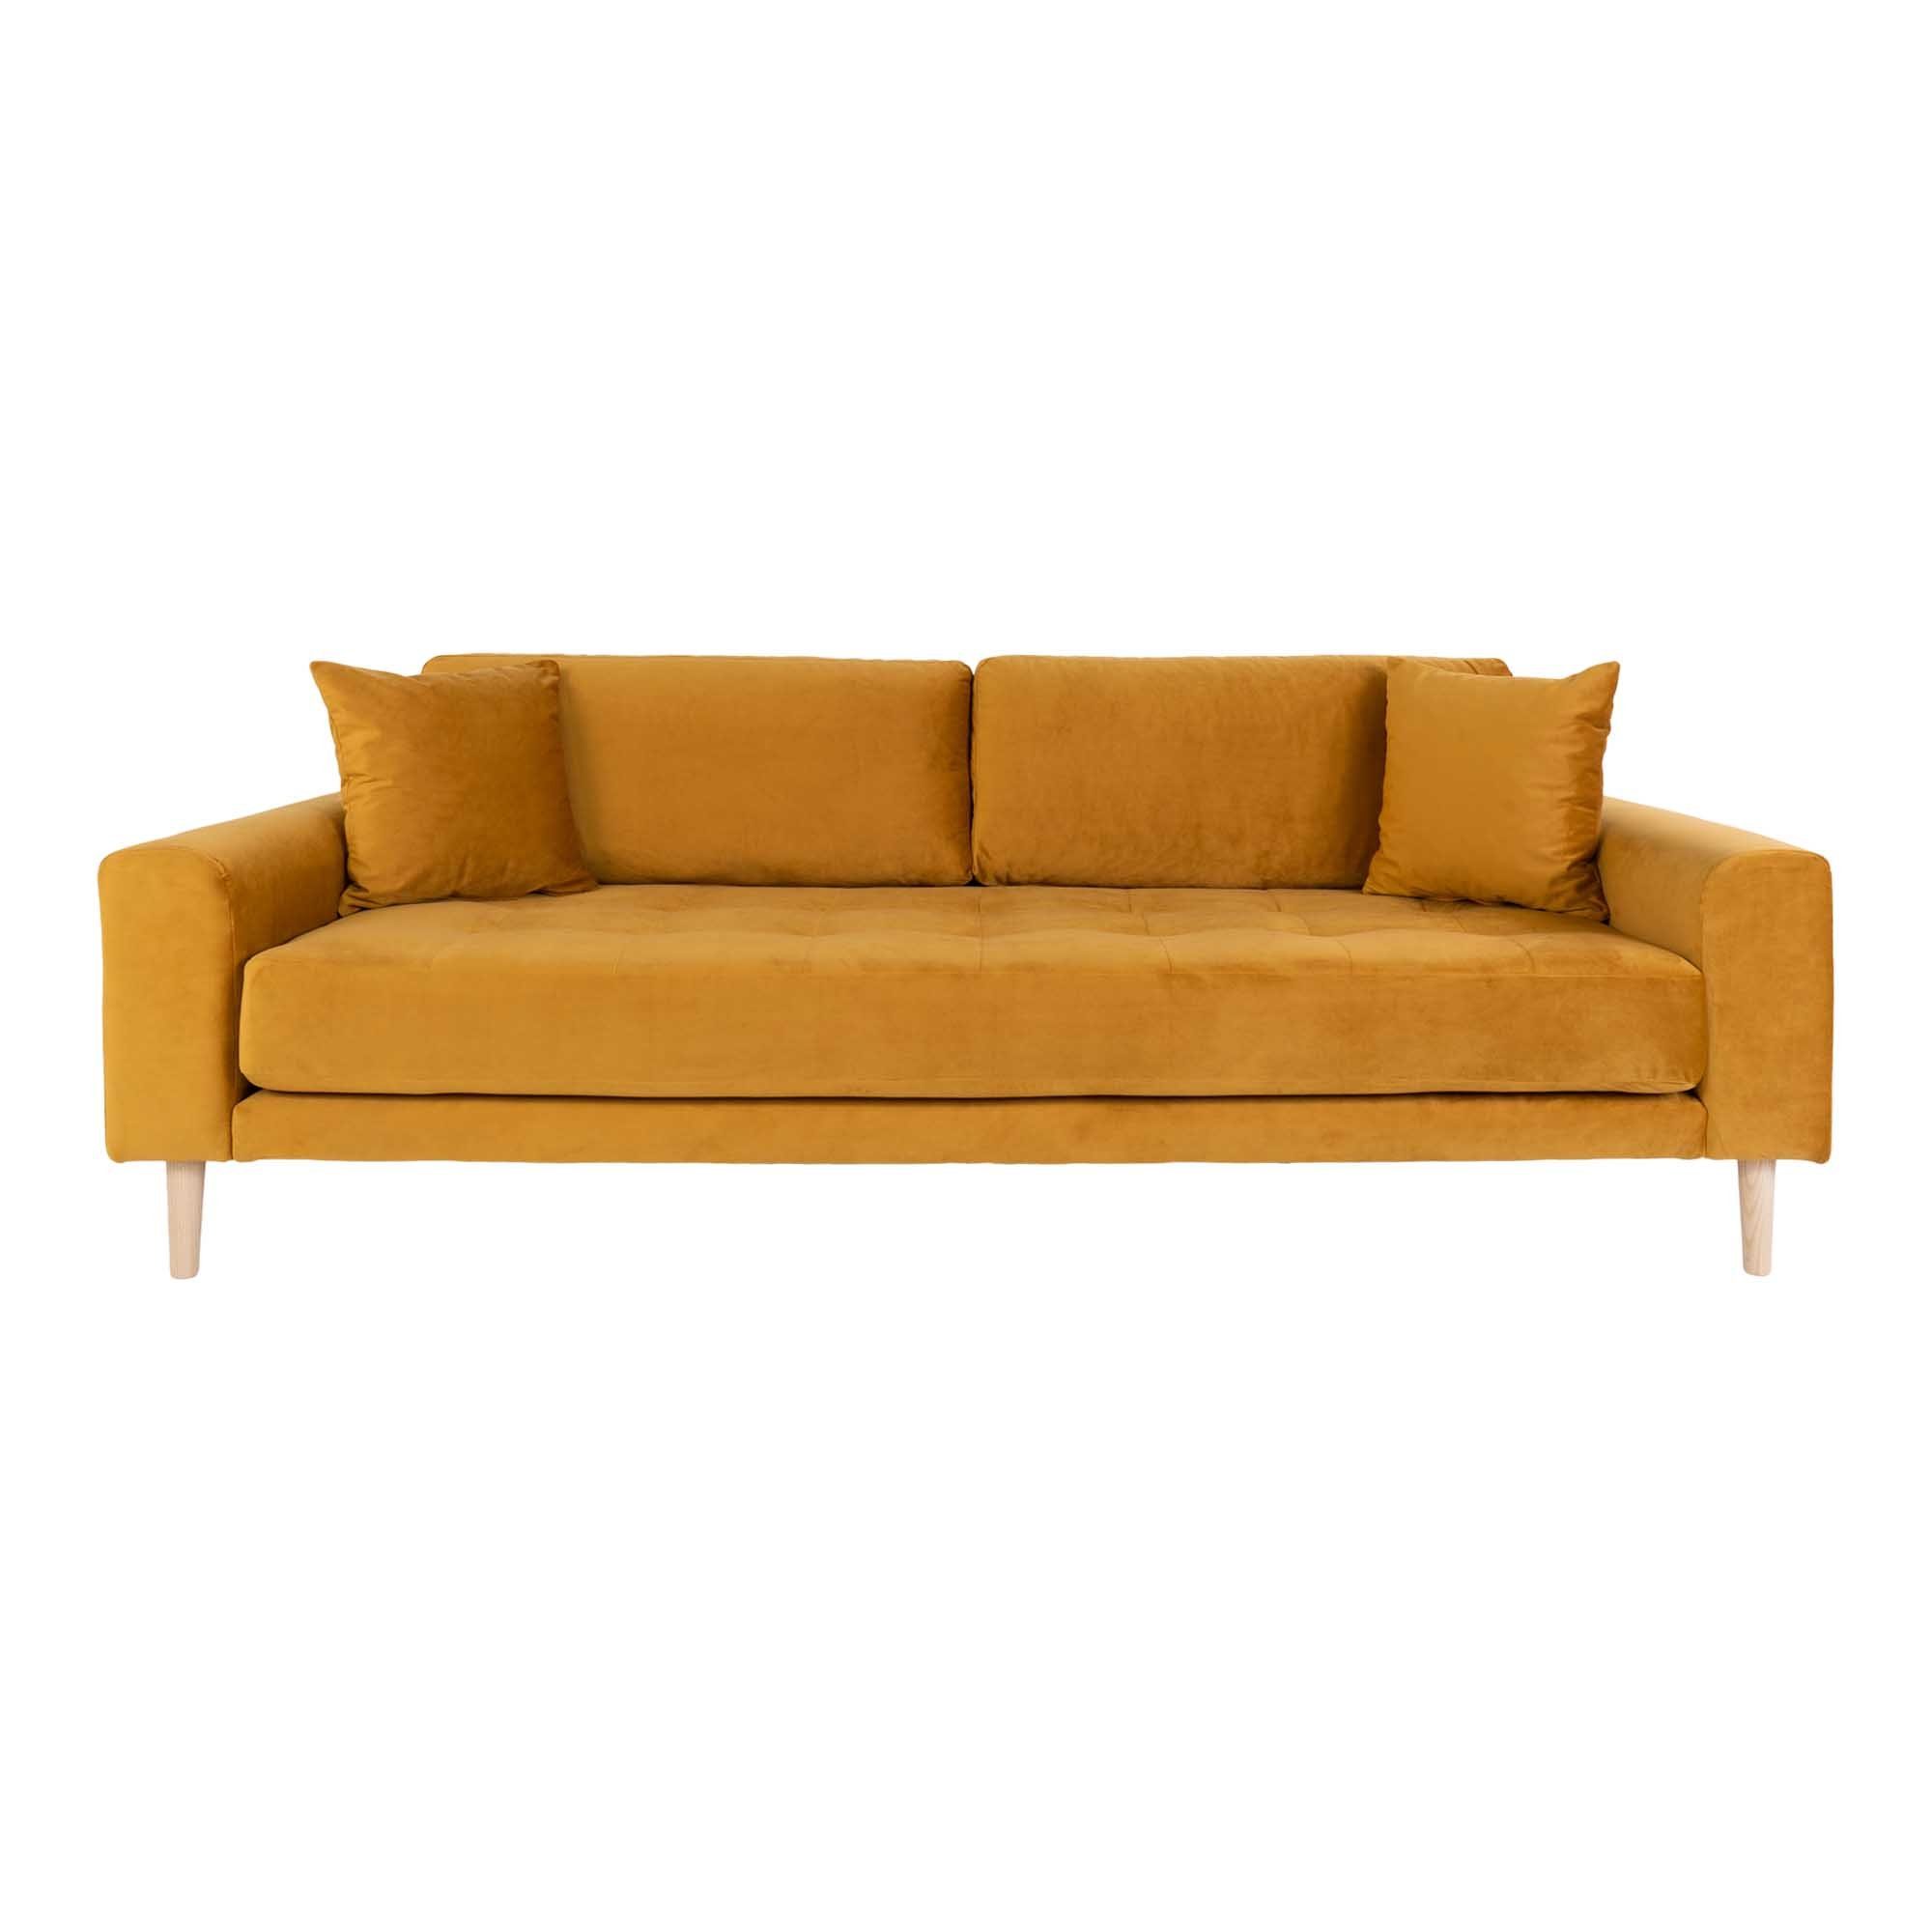 Sofa Sofa Lido dekorative Pers. Gelb inkl. ebuy24 Kissen 2 3 velour